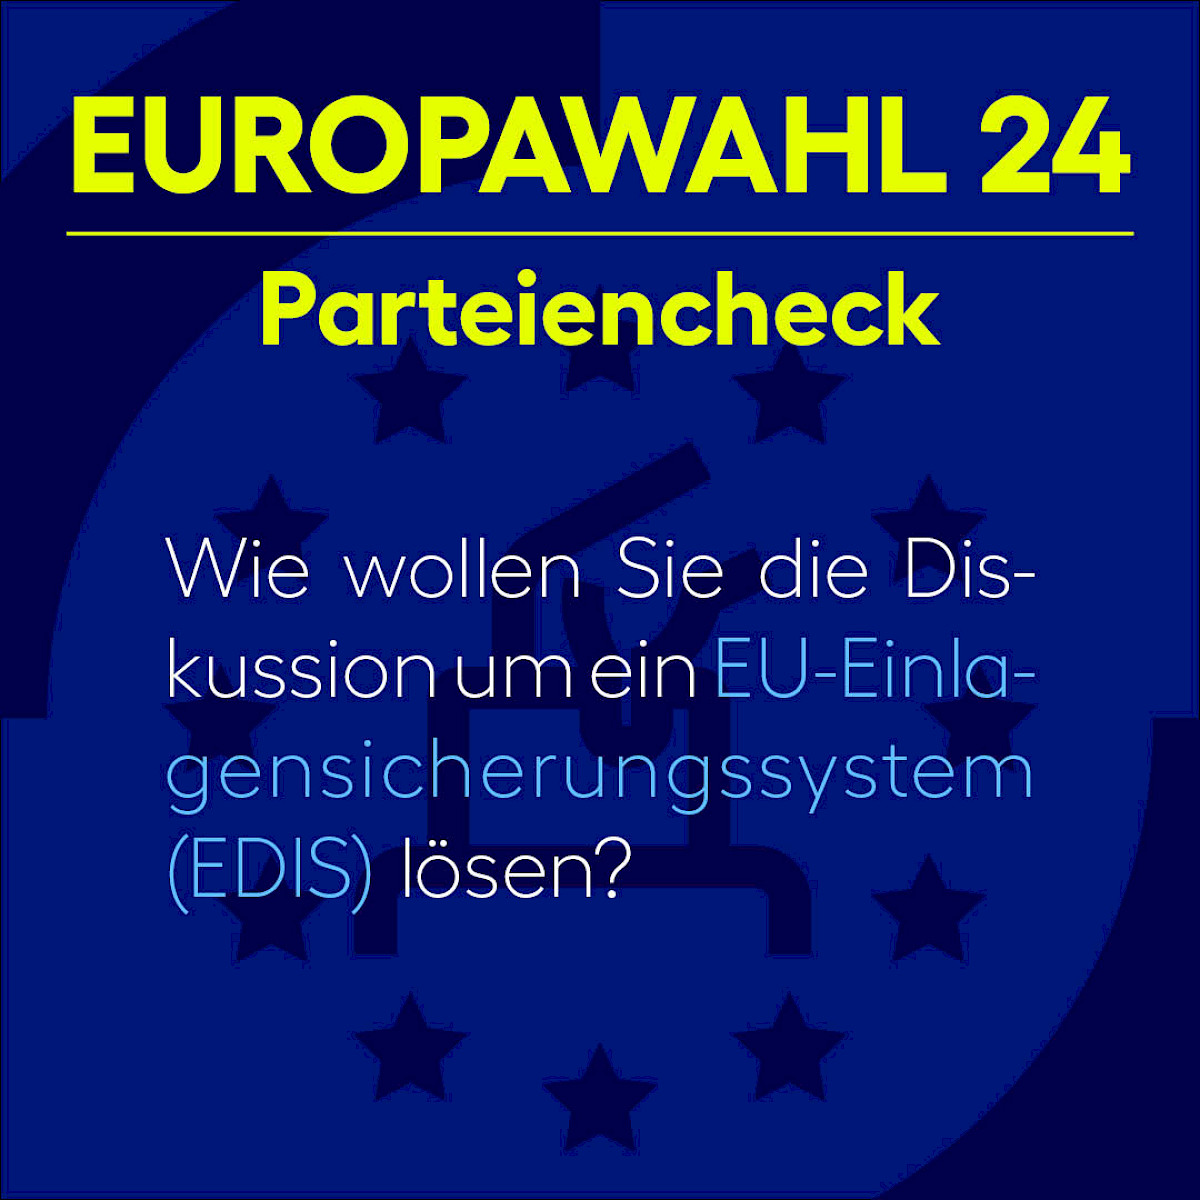 europawahl-quadrat_1.jpg